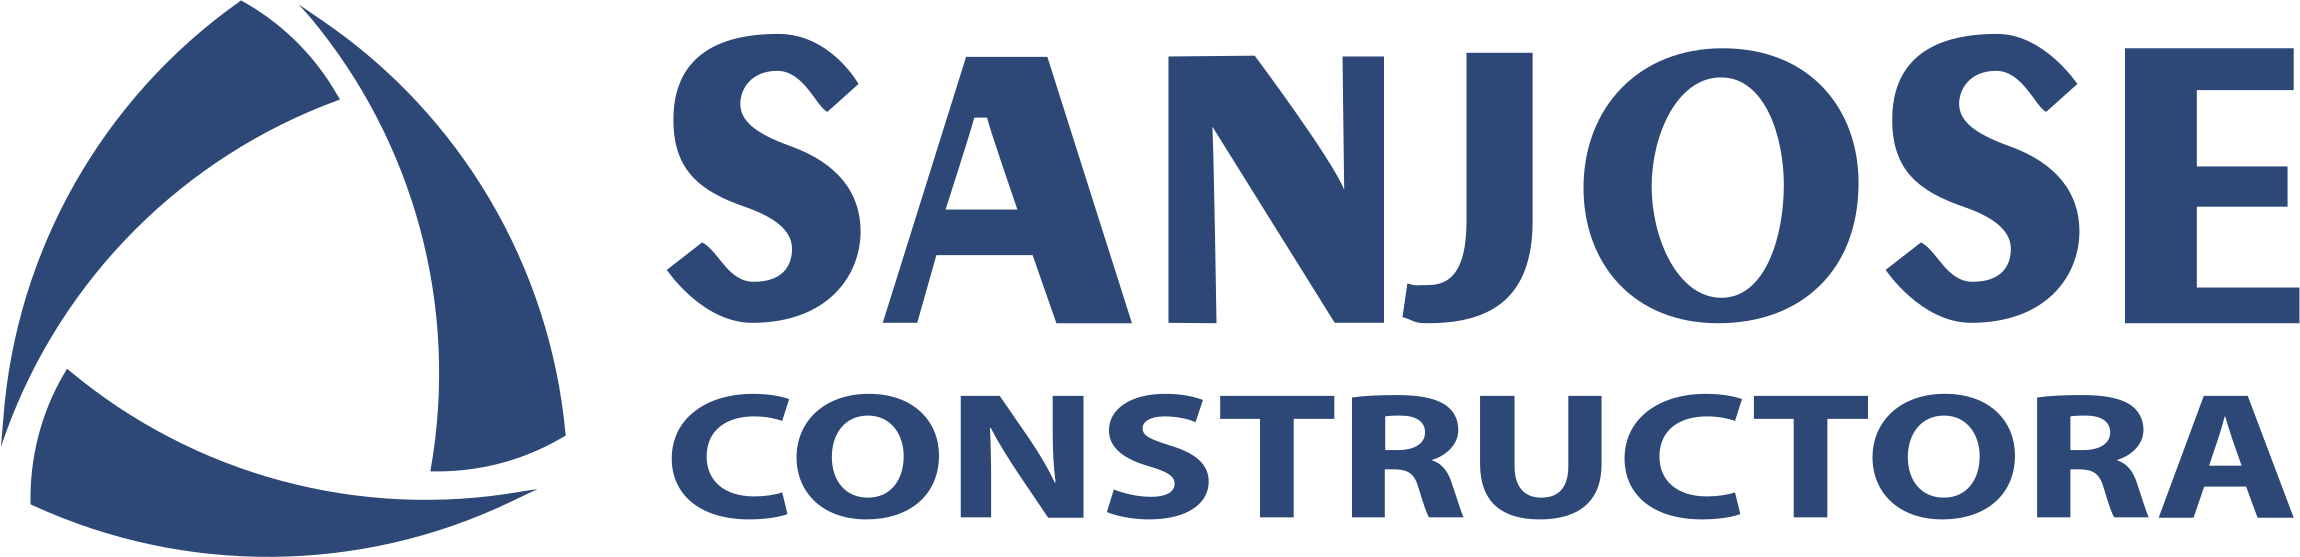 san-jose-constructora-logo